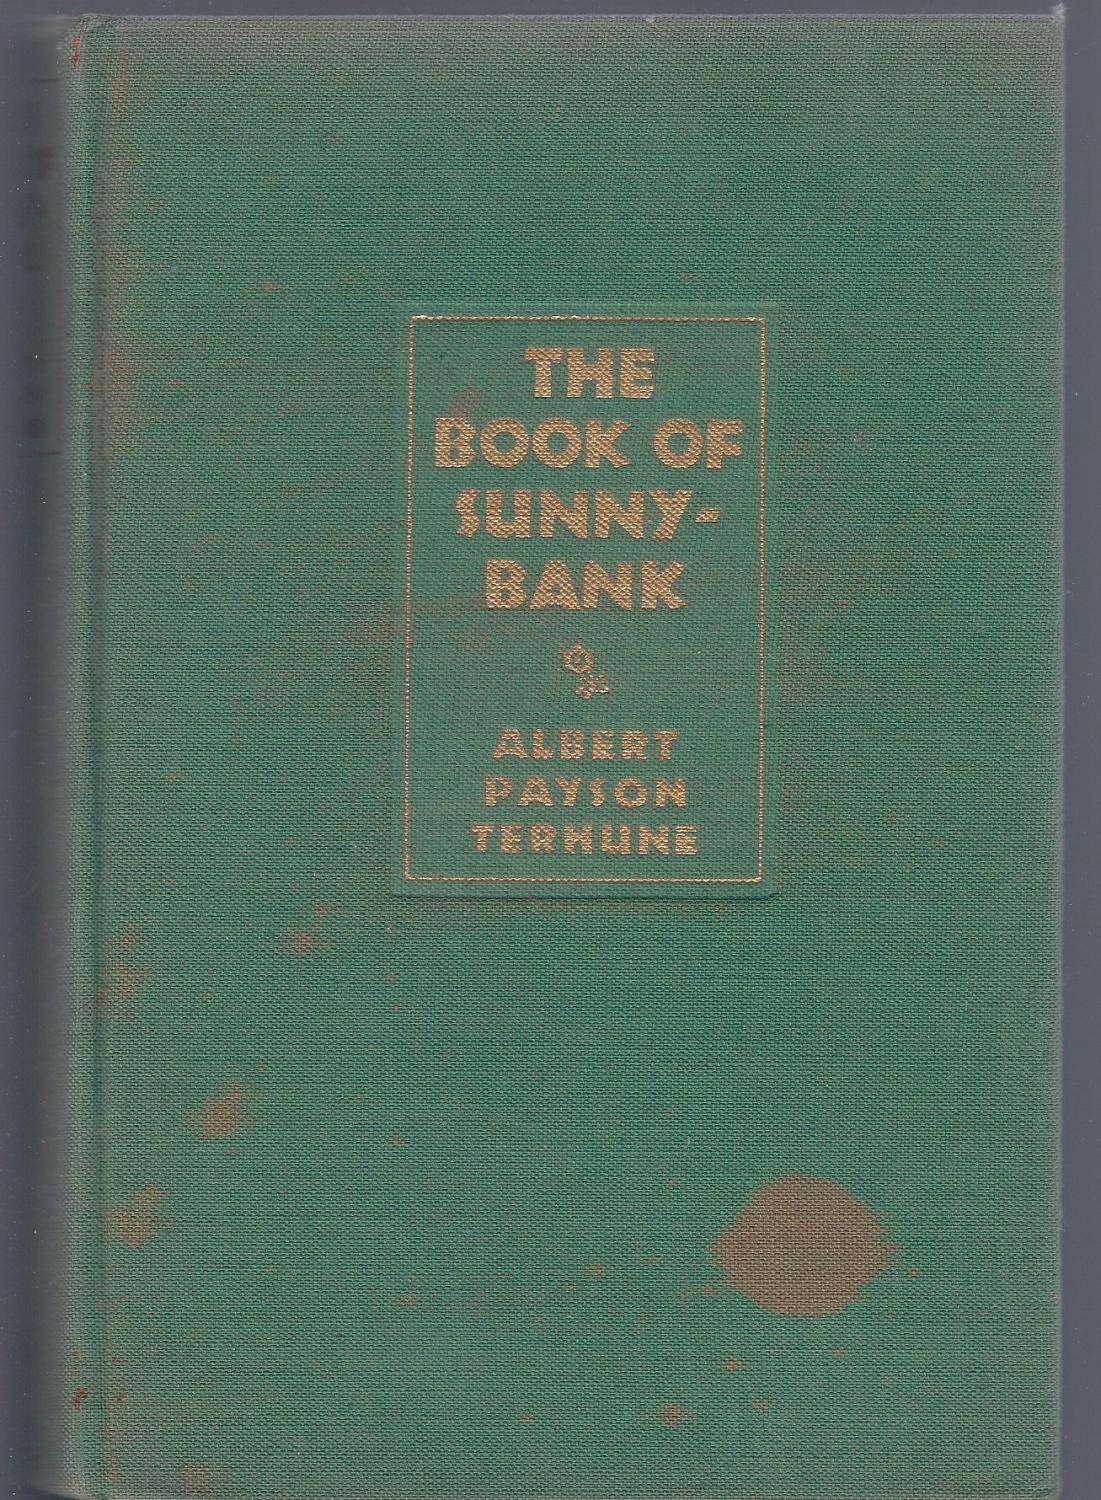 THE BOOK of SUNNYBANK (First Edition) - Terhune, Albert Payson